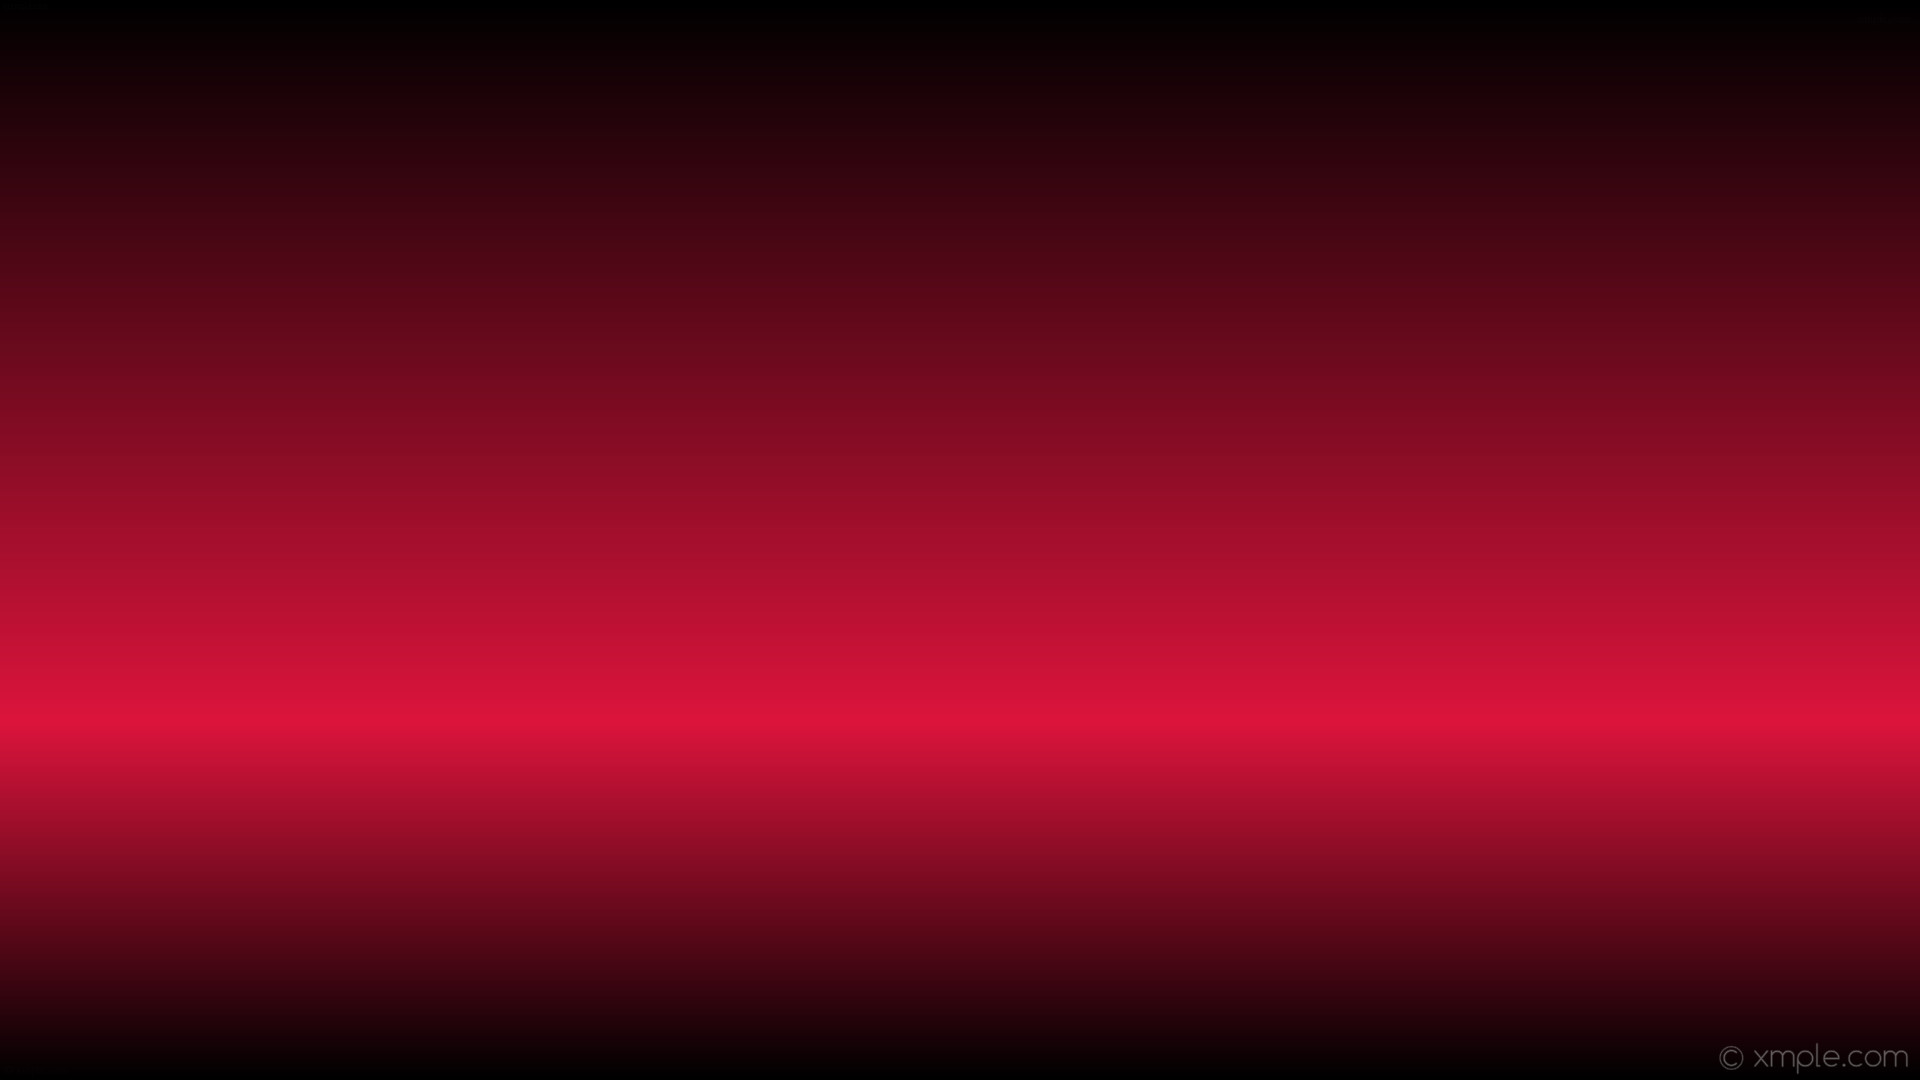 1920x1080 wallpaper linear black red gradient highlight crimson #000000 #dc143c 90Â°  67%